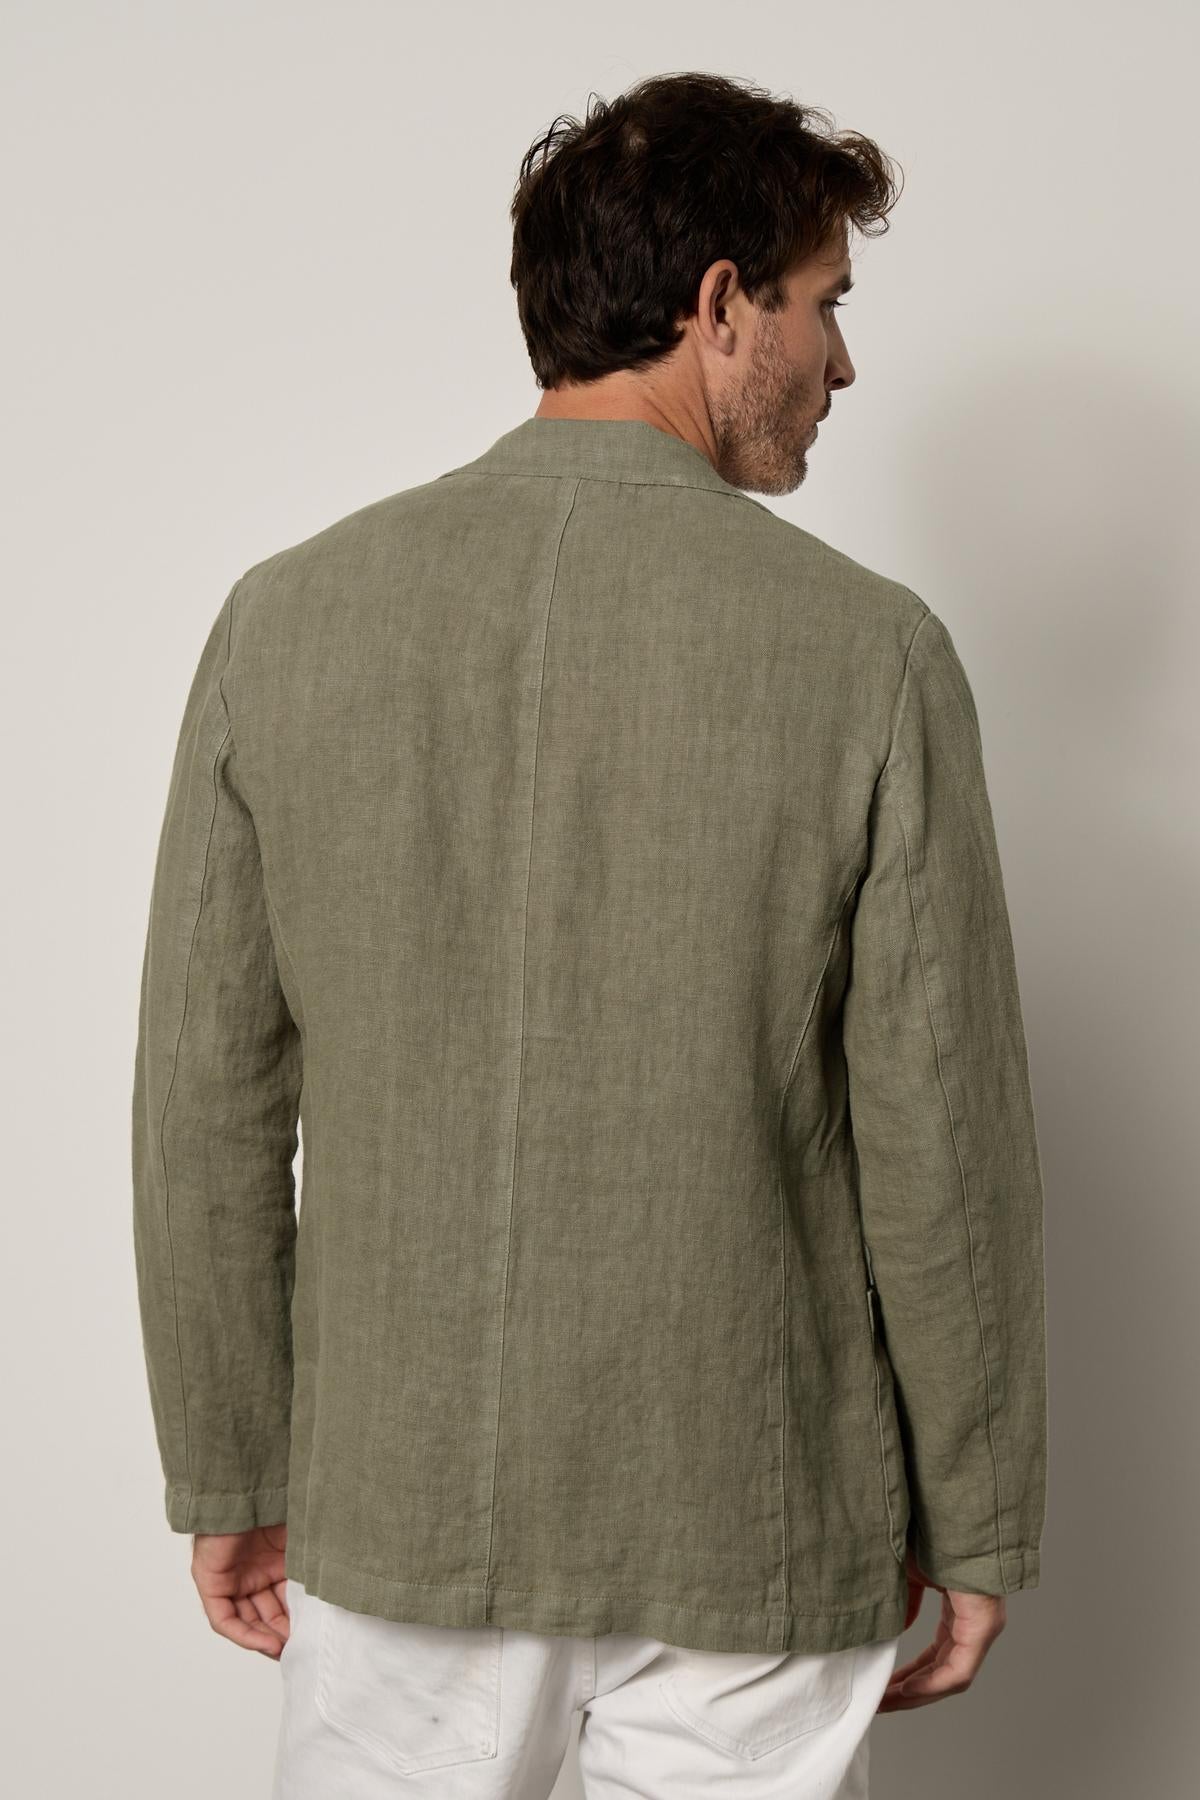 The back view of a man wearing a Velvet by Graham & Spencer Joshua Linen Blazer.-26311108591809